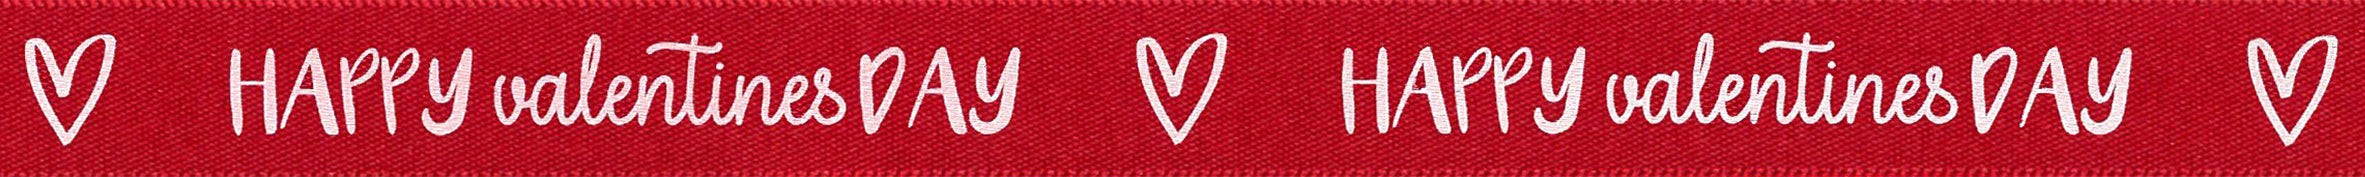 Berisfords Ribbon - Happy Valentines Day RED: 15mm